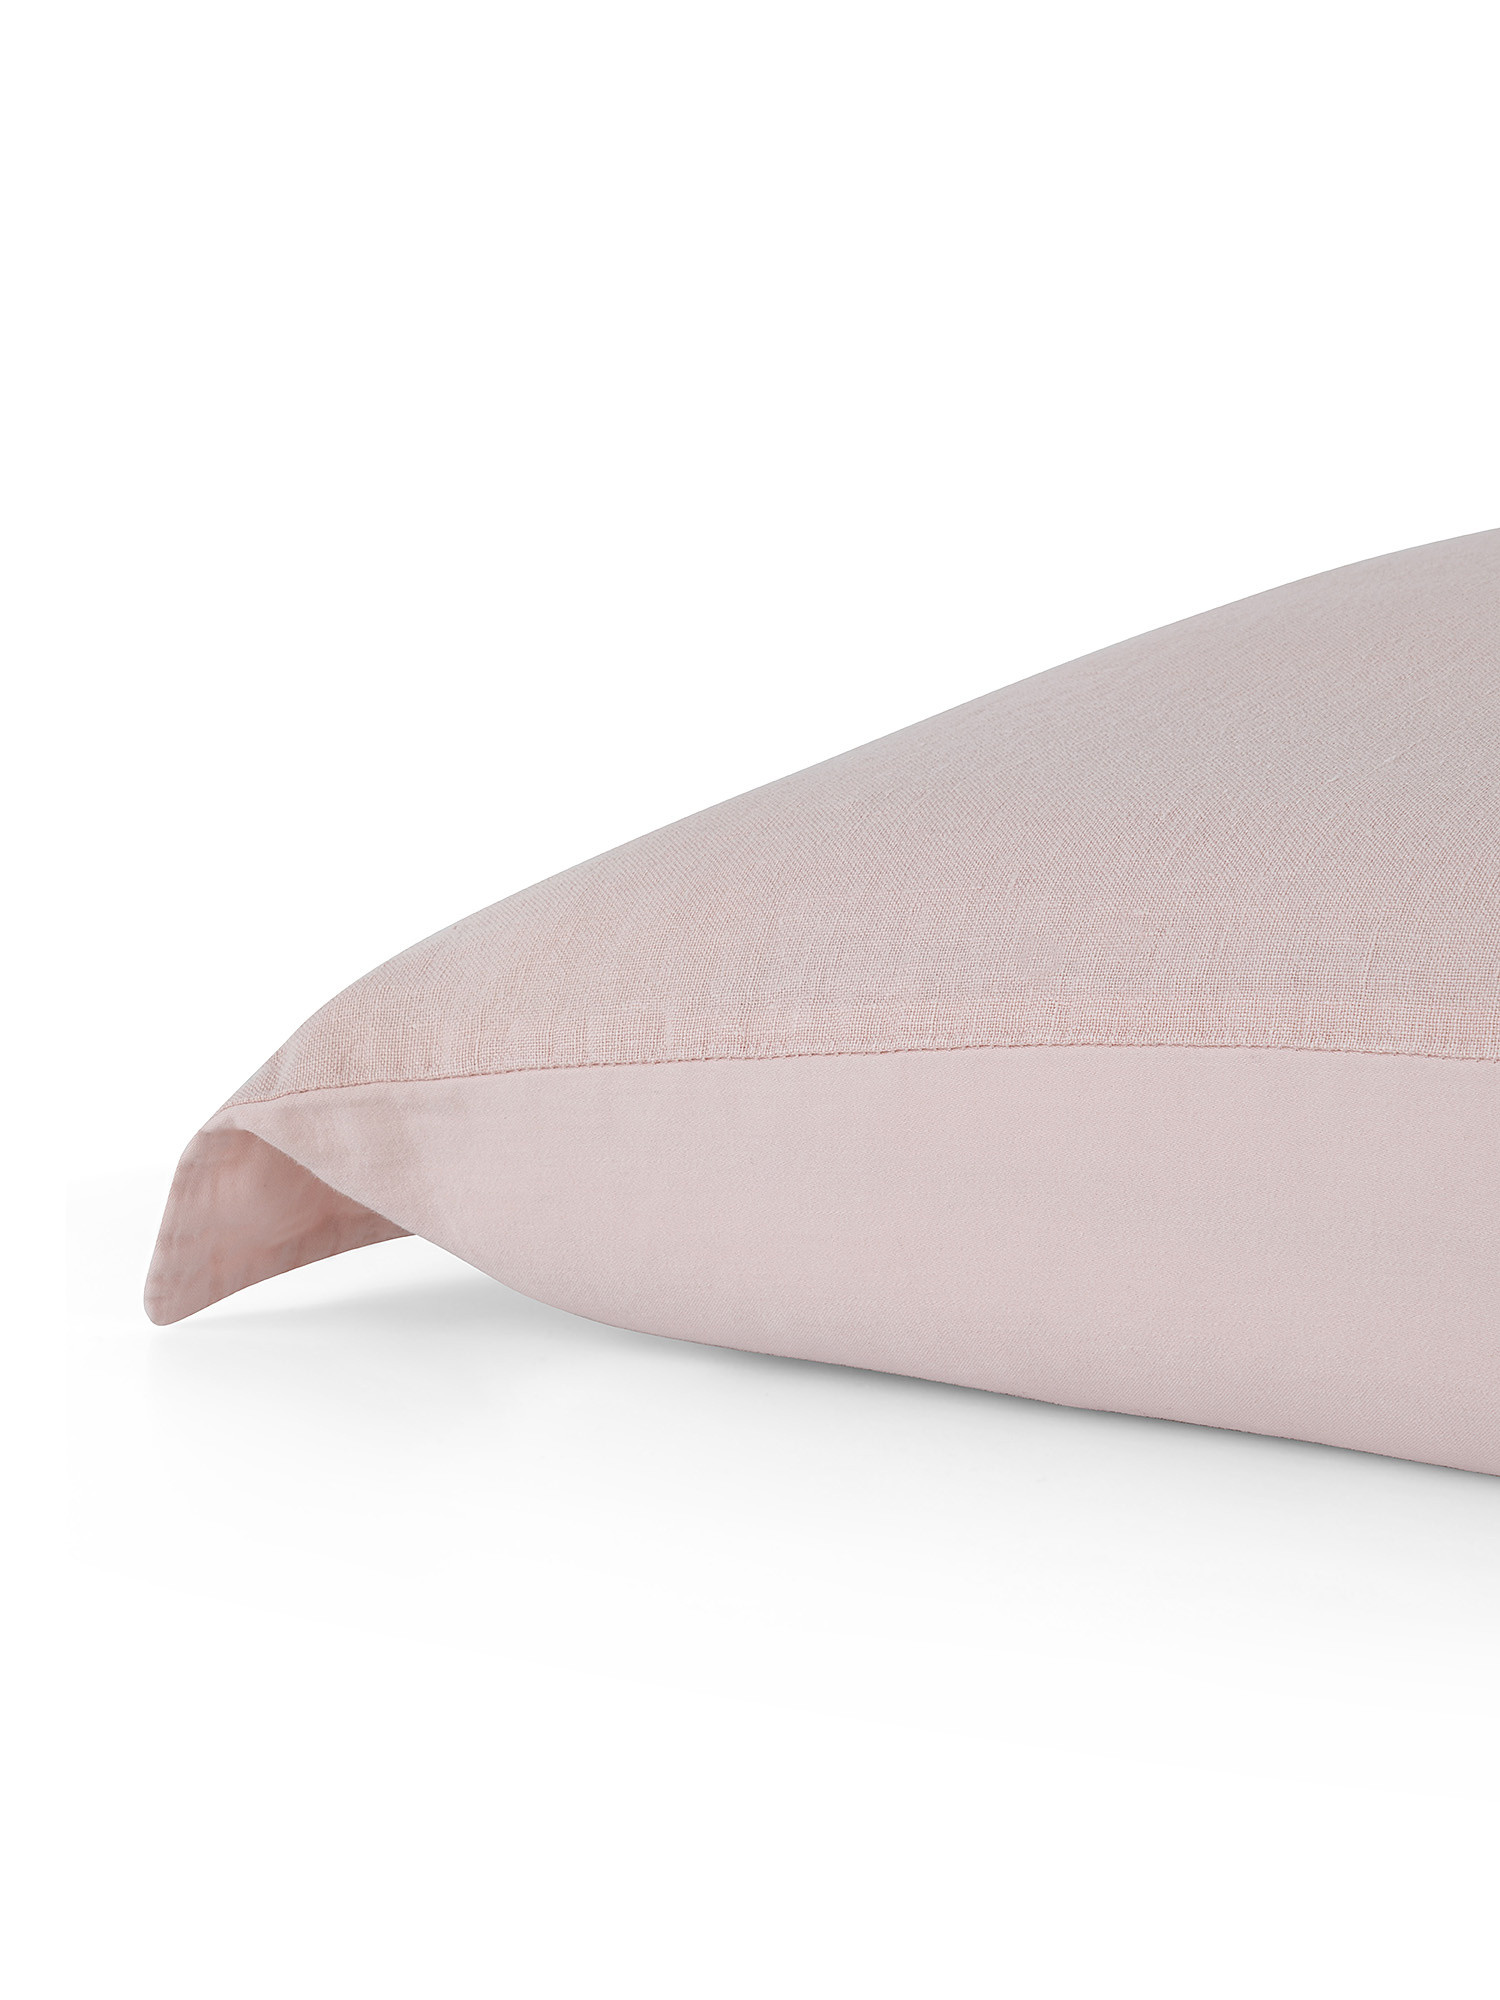 Zefiro plain color linen and cotton pillowcase, Light Pink, large image number 1